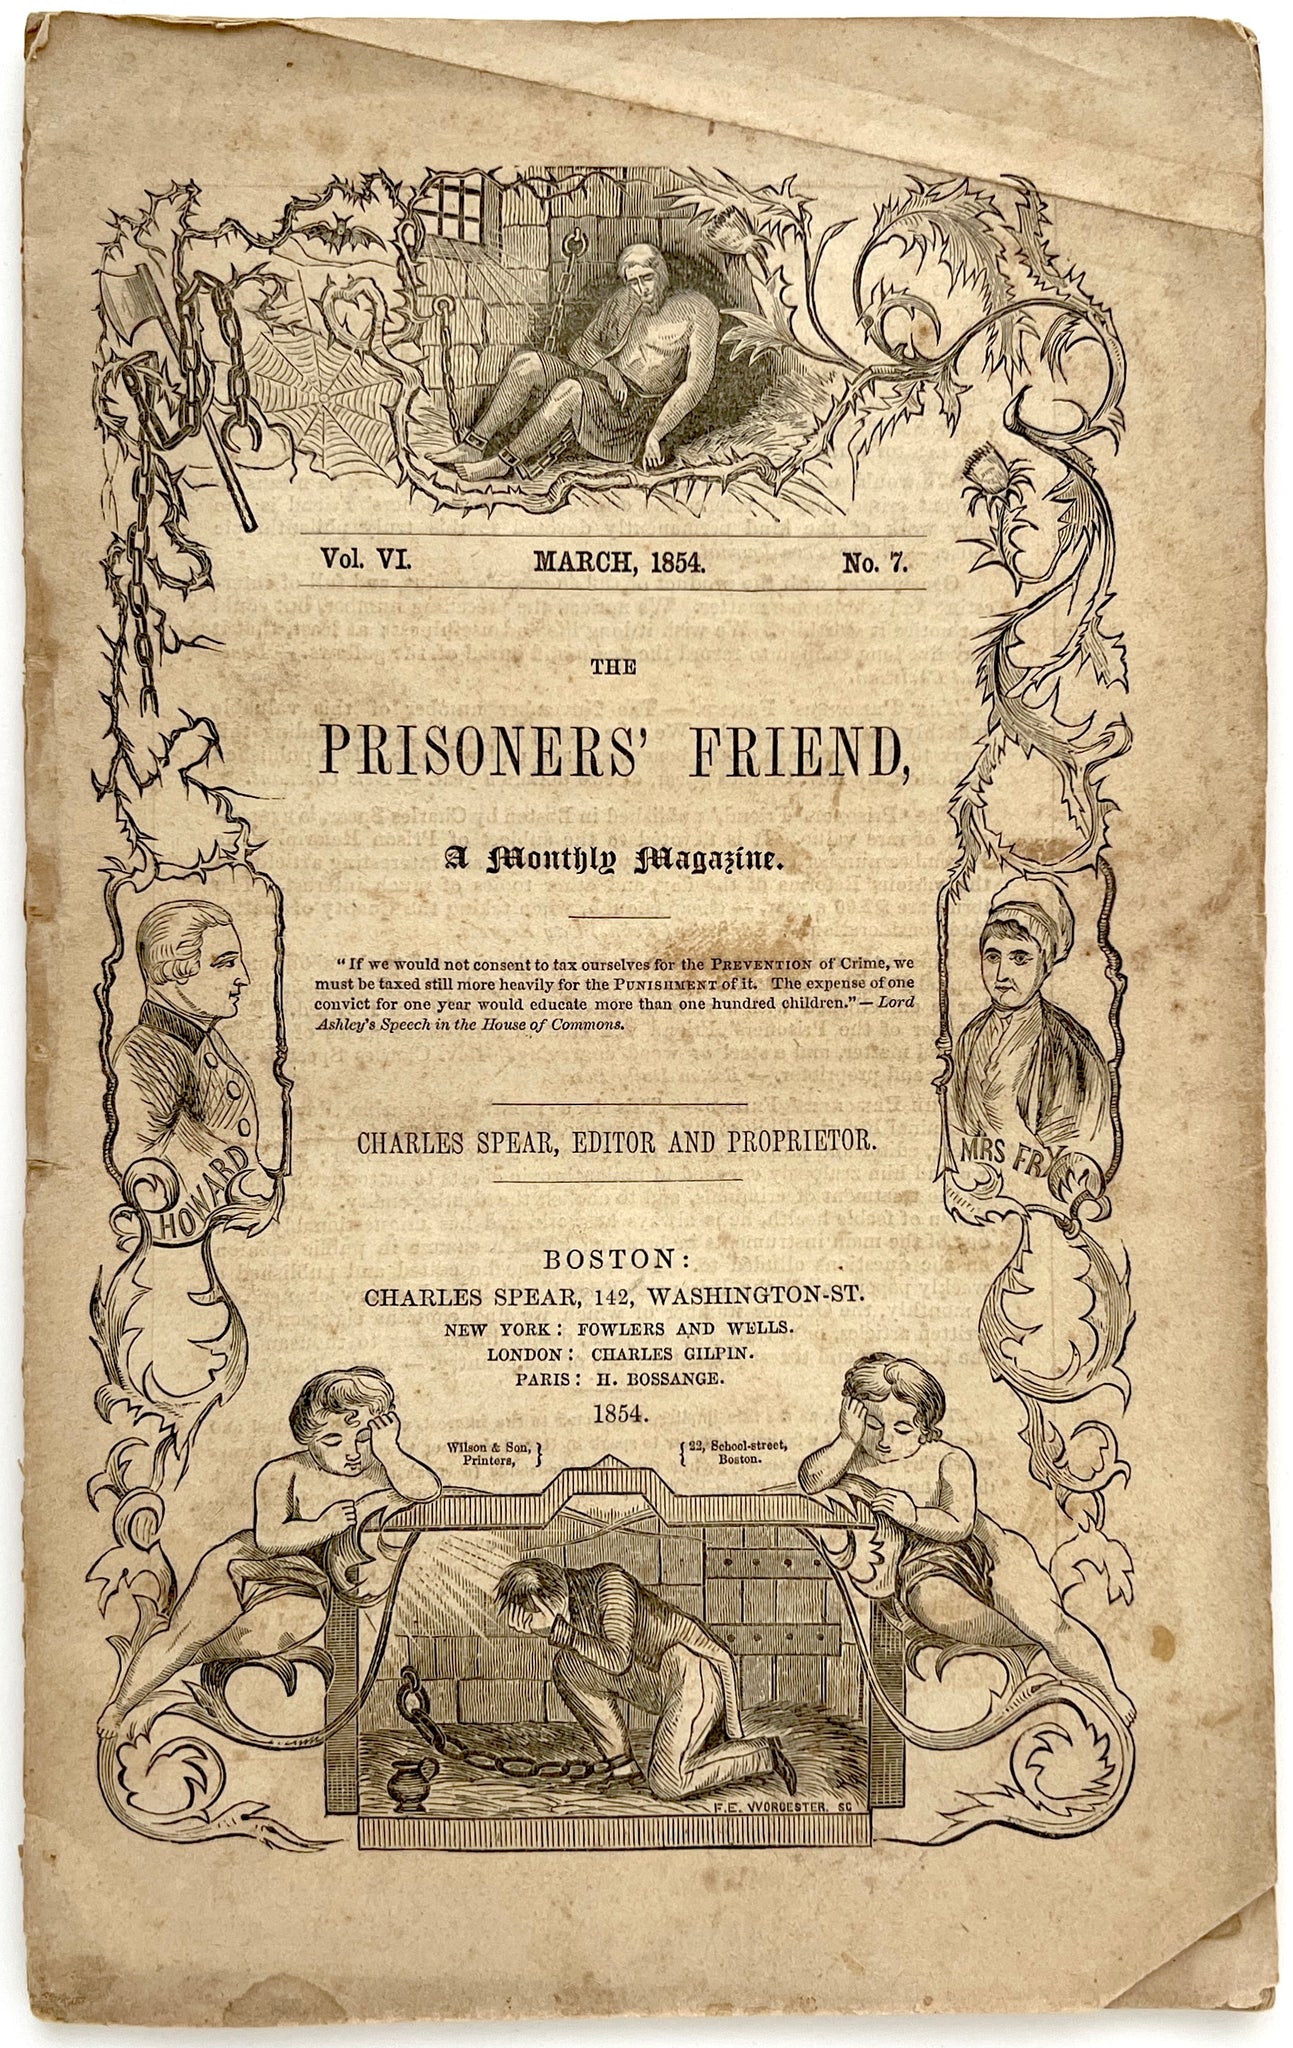 The Prisoners' Friend, A Monthly Magazine. Vol. VI, No. 7. March, 1854